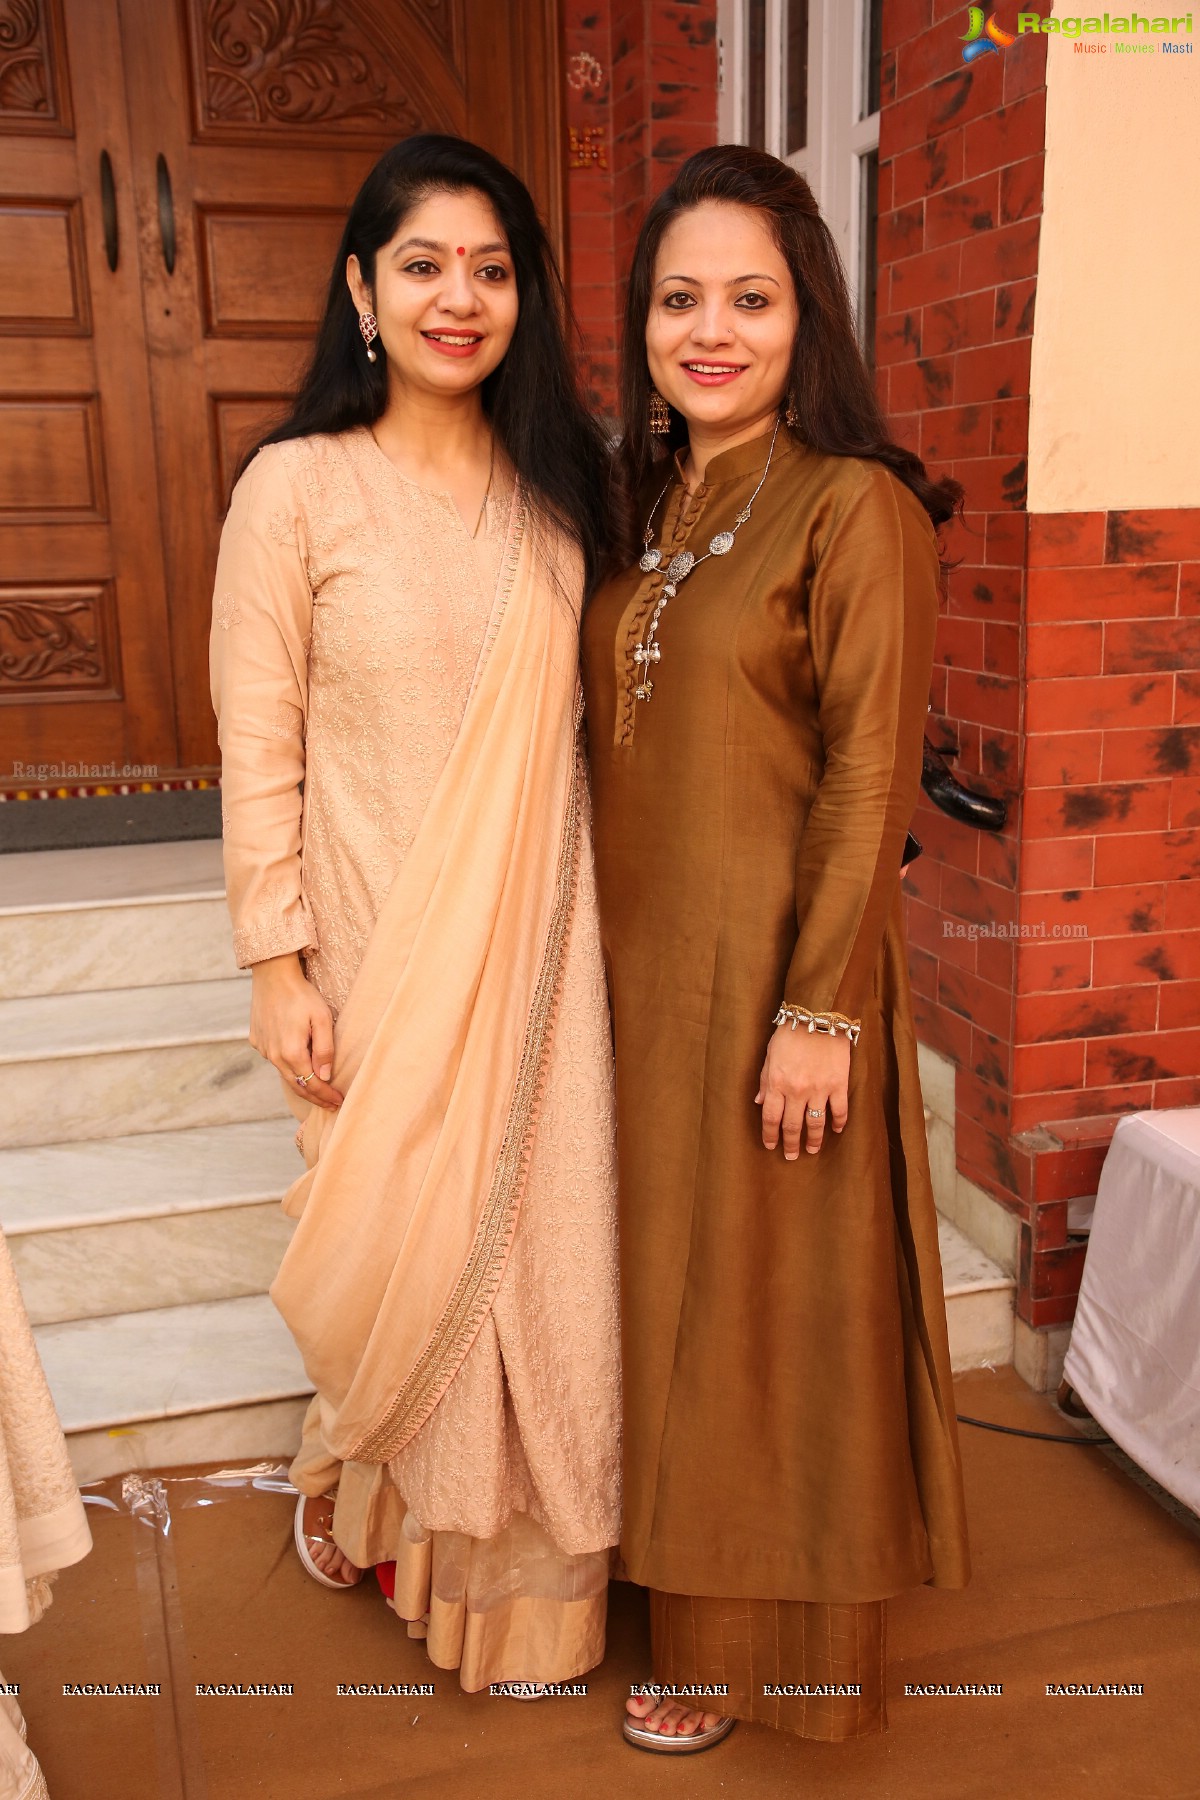 Anushree Patodi and Anjani Shah's Anushree Patodi Boutique Pre Launch Party